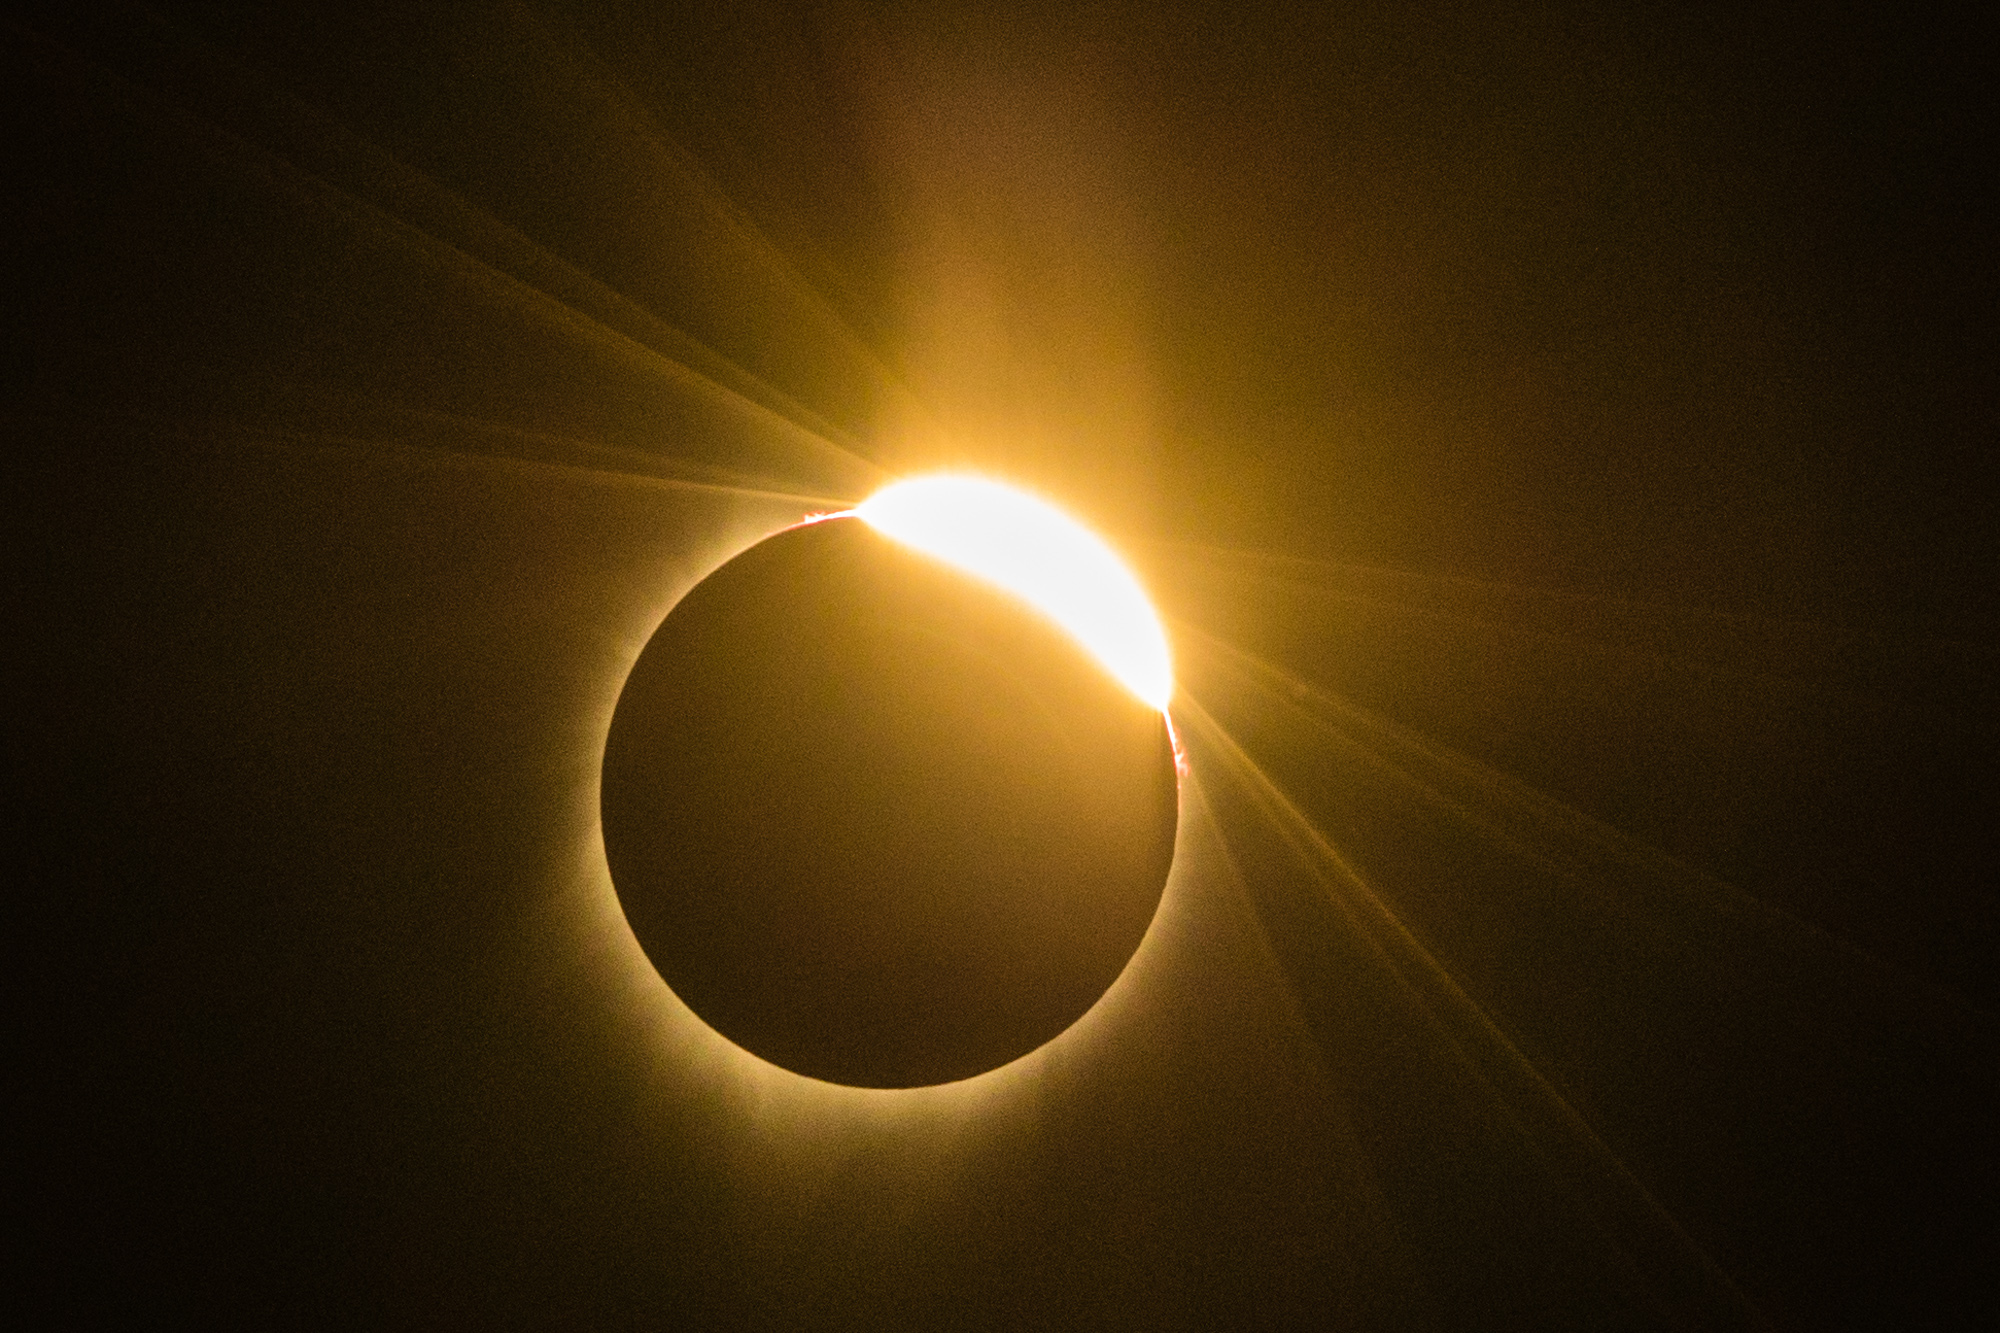 Joe Biden's Solar Eclipse Message Compared to Donald Trump's